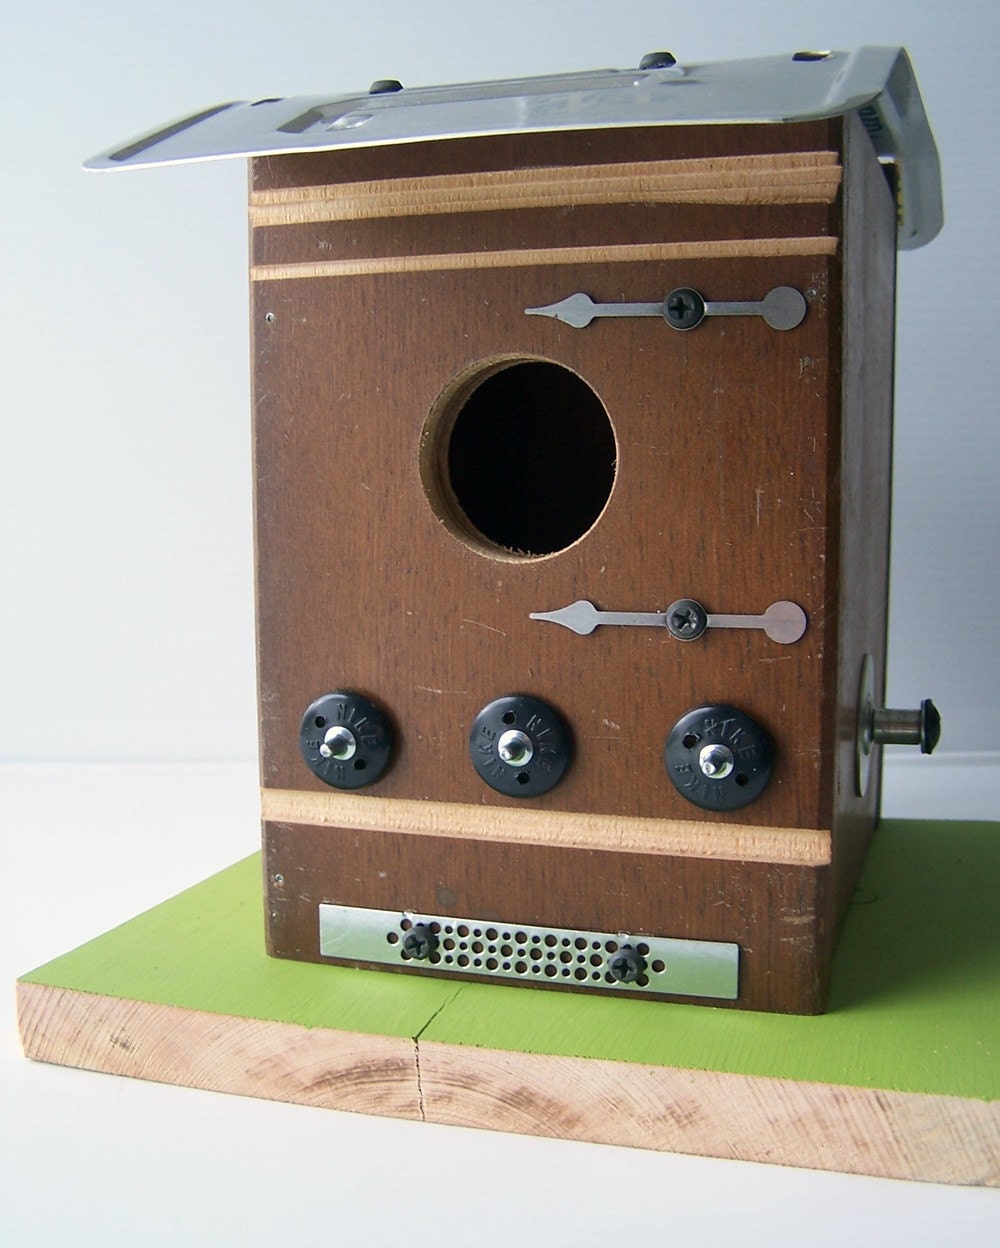 Steampunk Industrial Upcycled Handmade Birdhouse by Garageinc